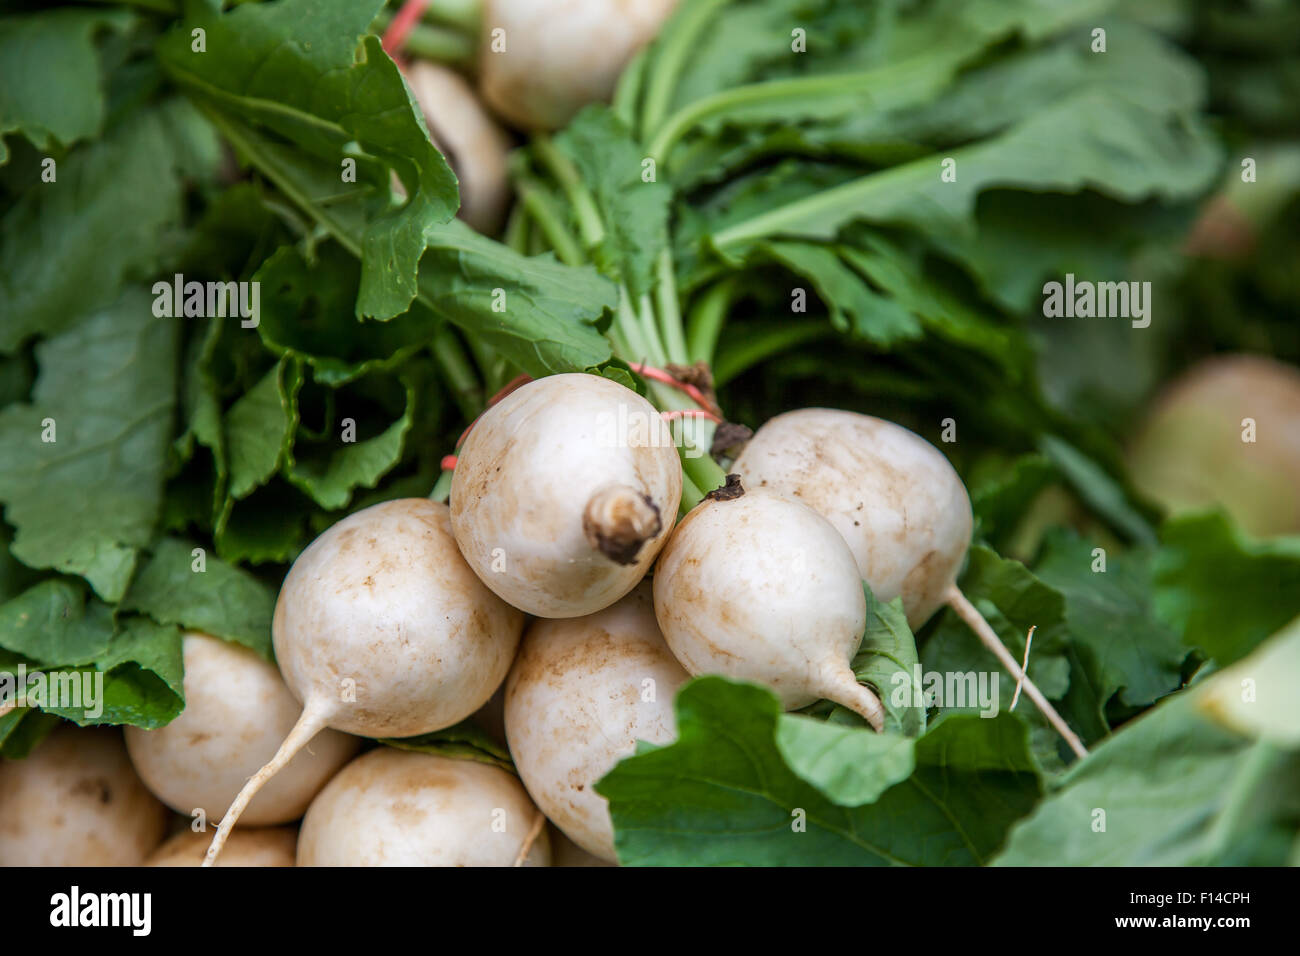 Fresh white turnip offered at market stall Stock Photo